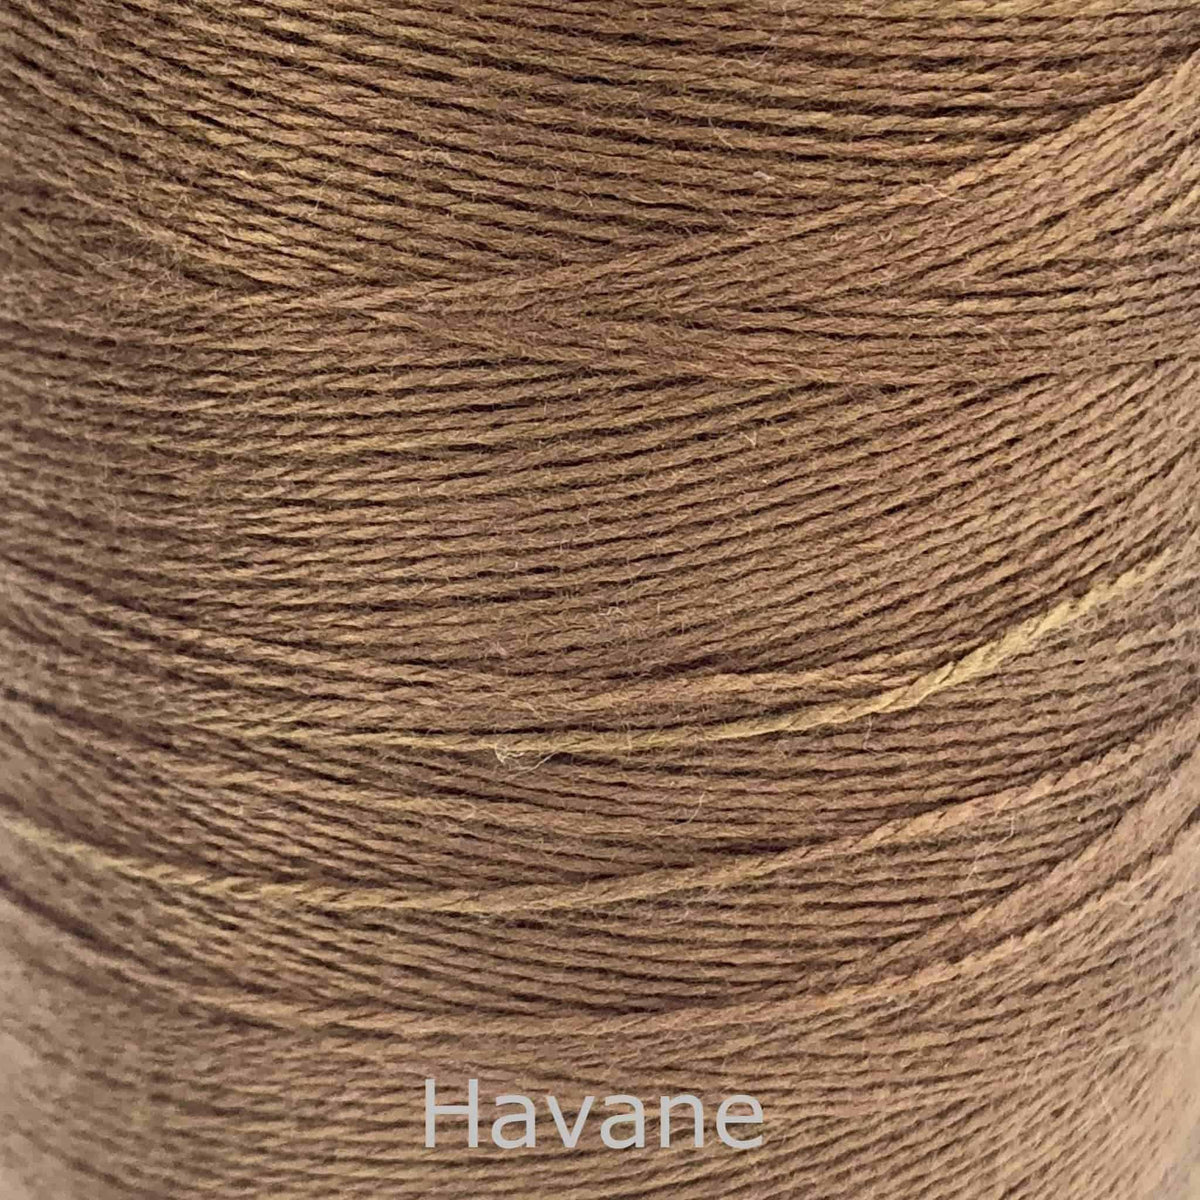 Sustainable Natural Tencel Weaving Yarn